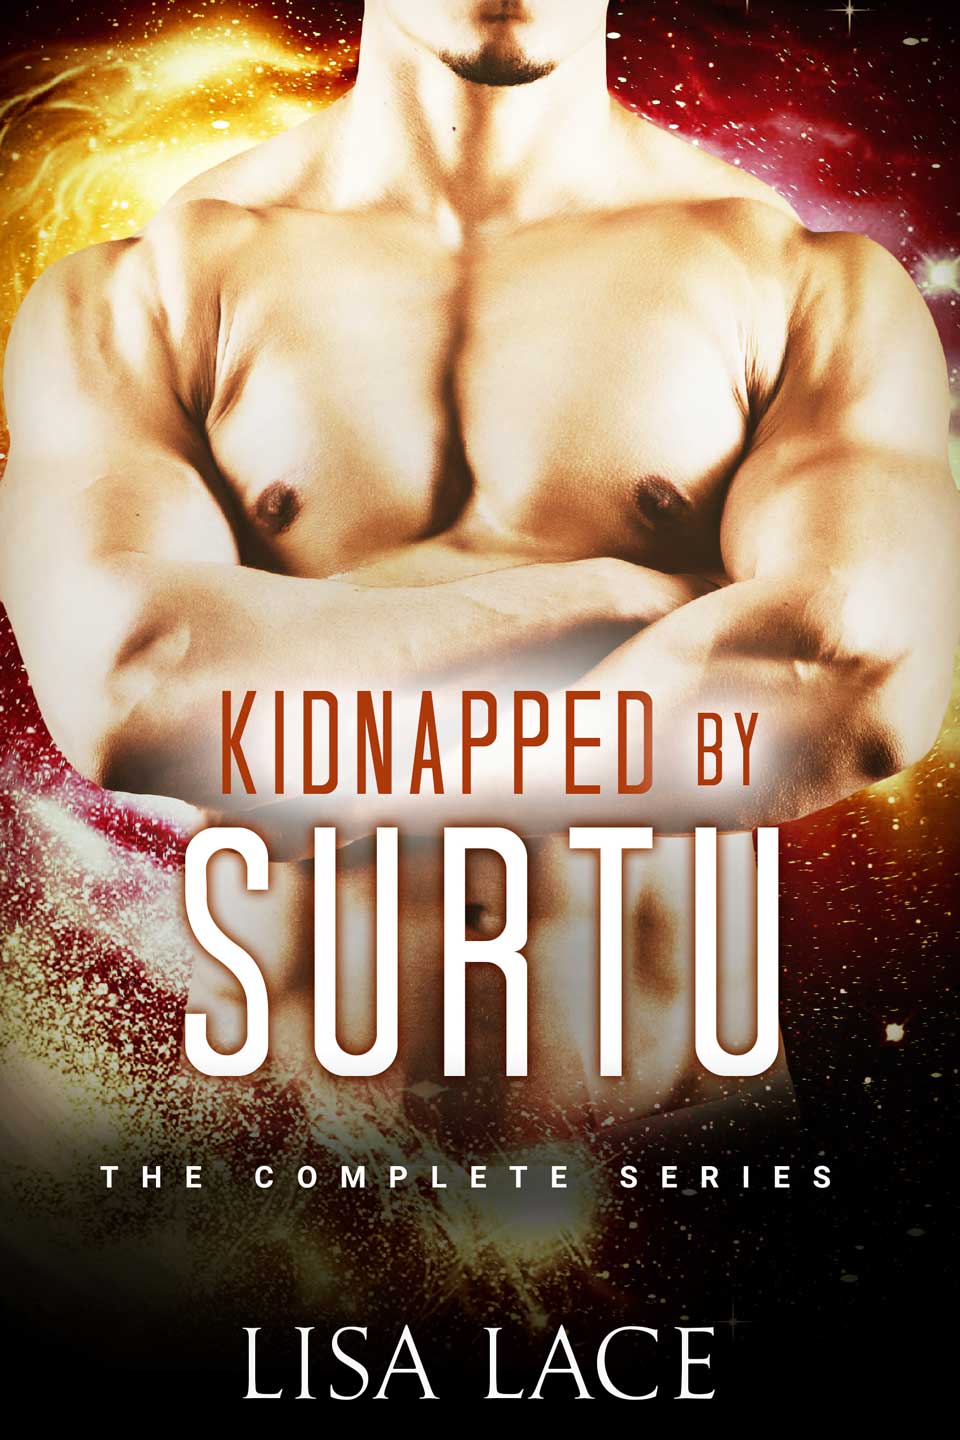 Kidnapped by Surtu